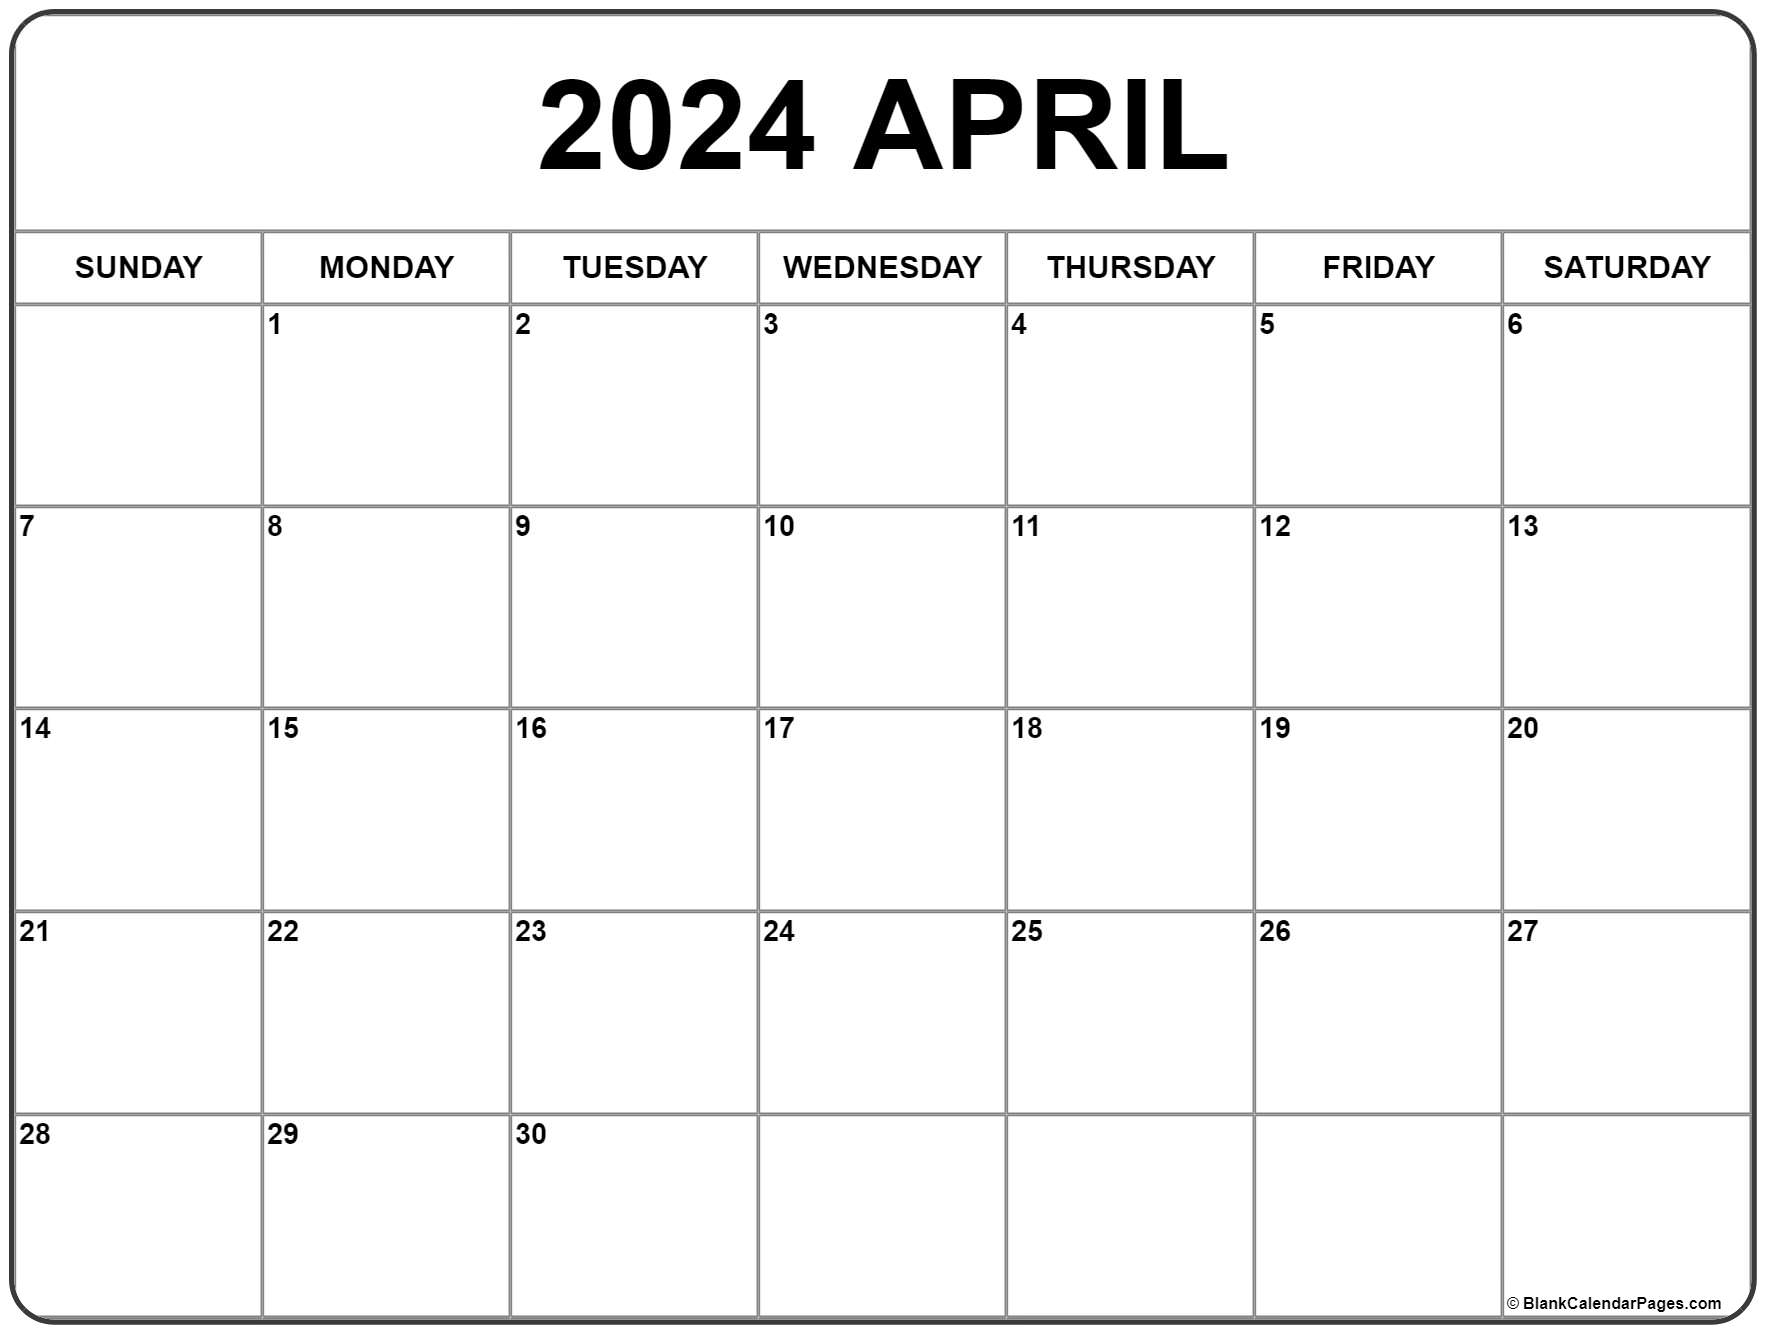 April 2024 Calendar | Free Printable Calendar intended for 2024 April Calender